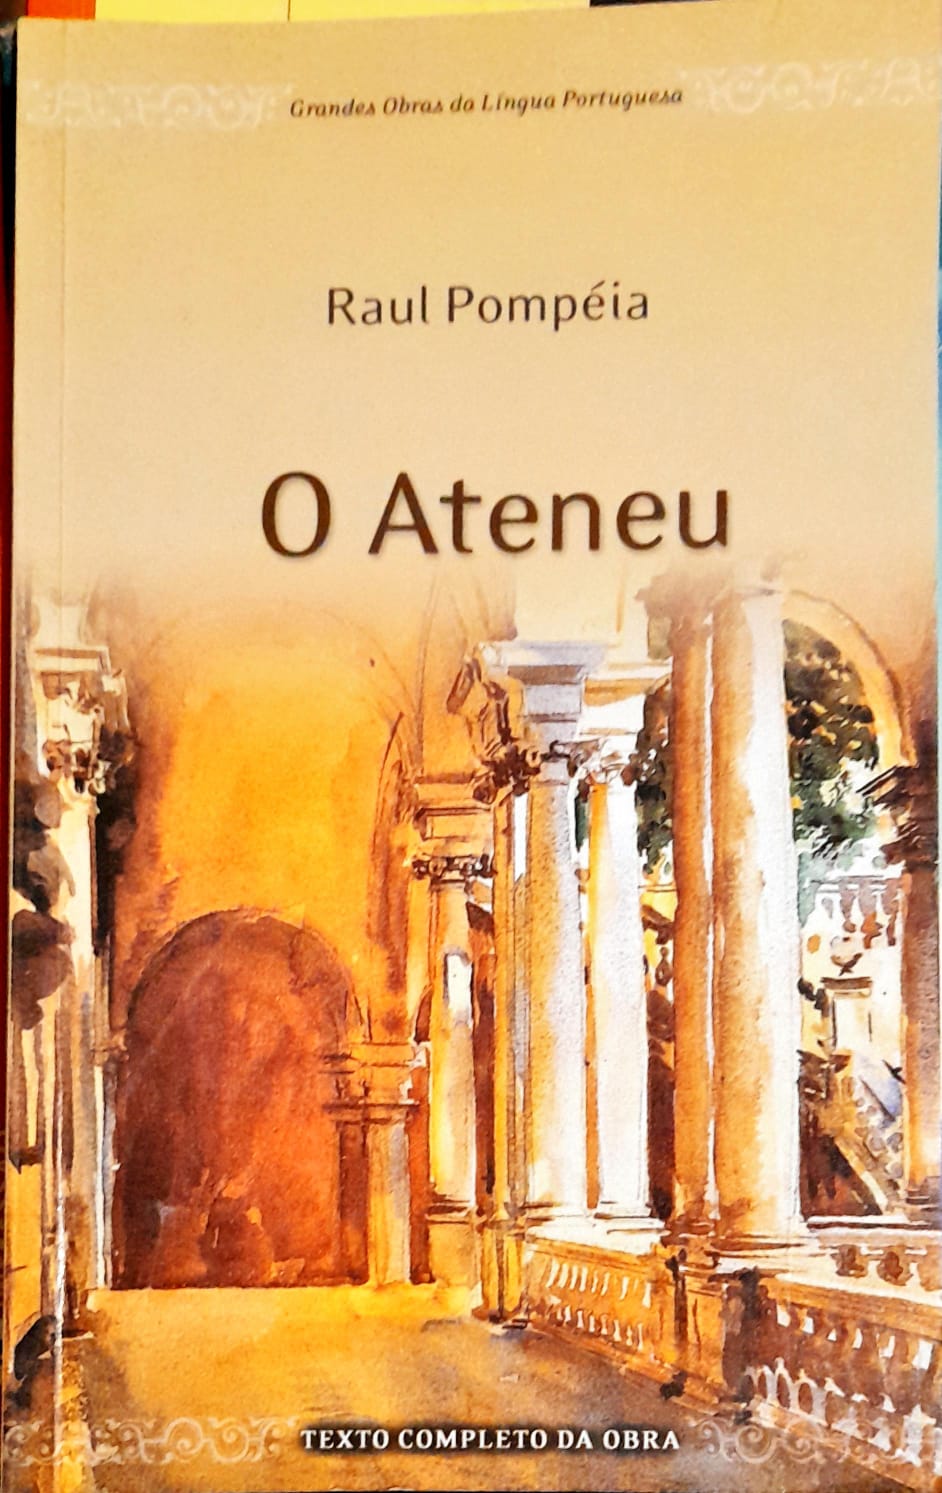 O Ateneu - Raul Pompéia Col. Grandes Obras da Língua Portuguesa